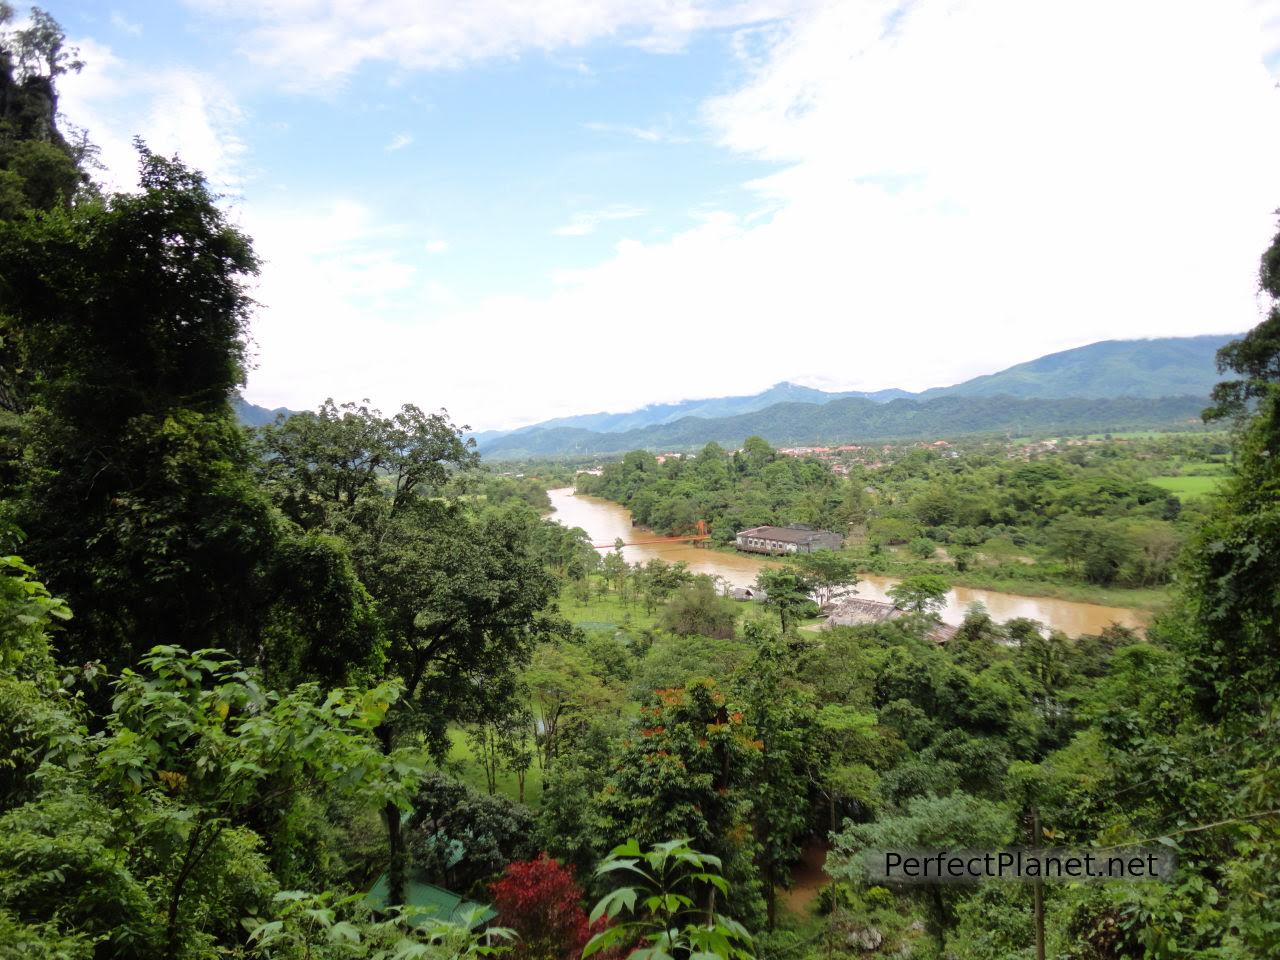 Views from Tham Jang cave